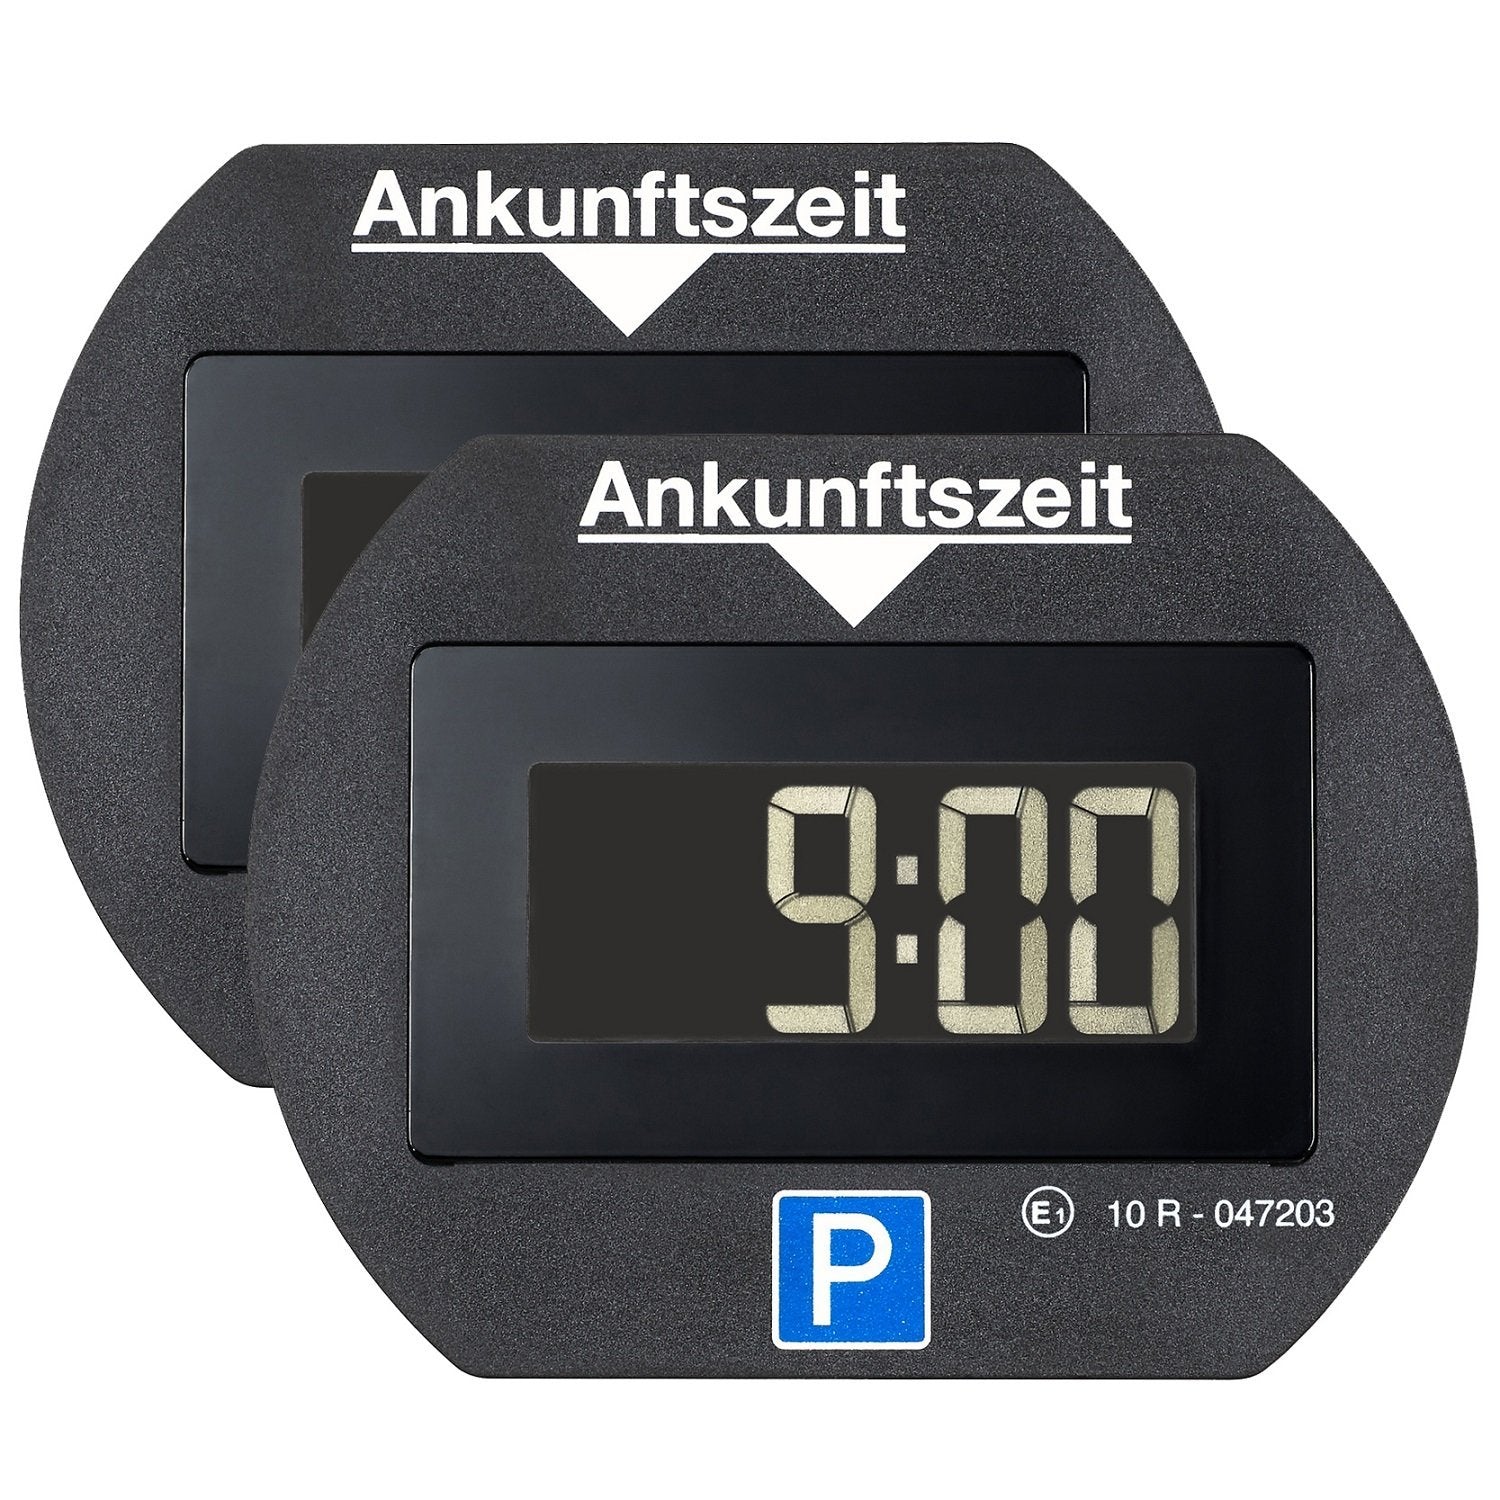 2x Park Lite - Elektronische Parkscheibe - Digitale Parkuhr mit offizieller  Zulassung - 2 Stück Set